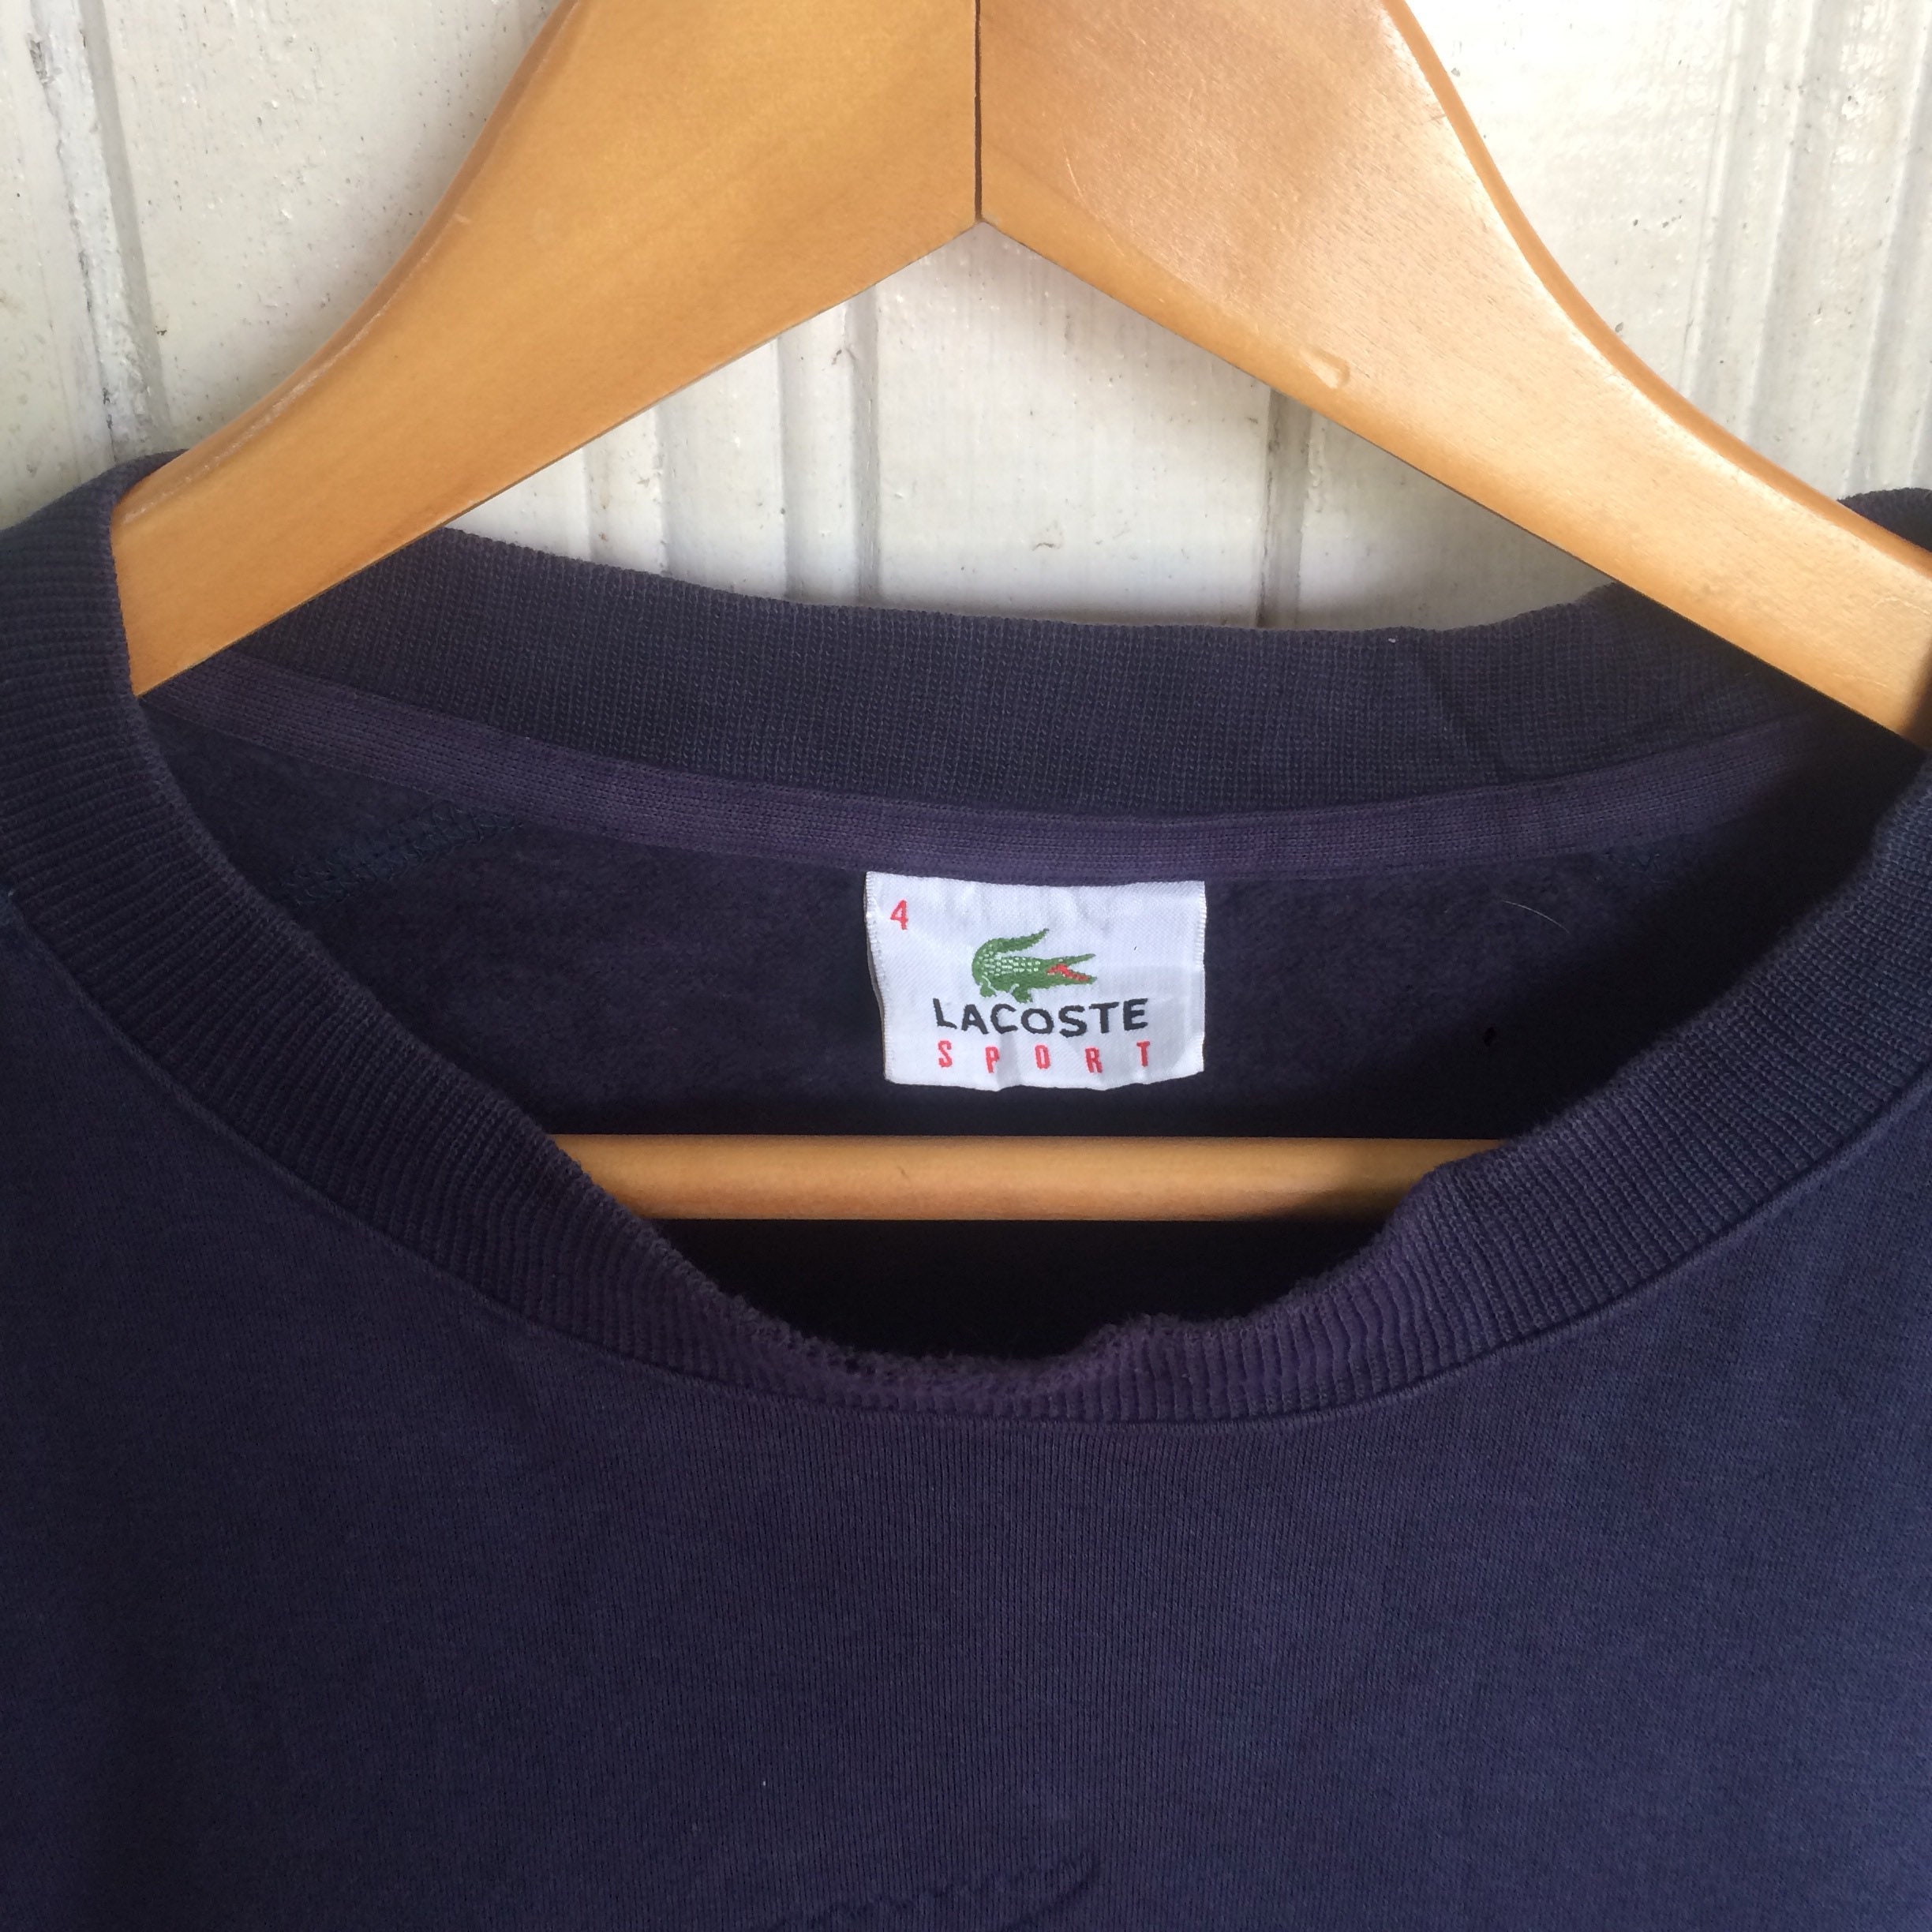 Vintage LACOSTE SPORT Sweatshirt Big Lacoste Logo at Front - Etsy Australia